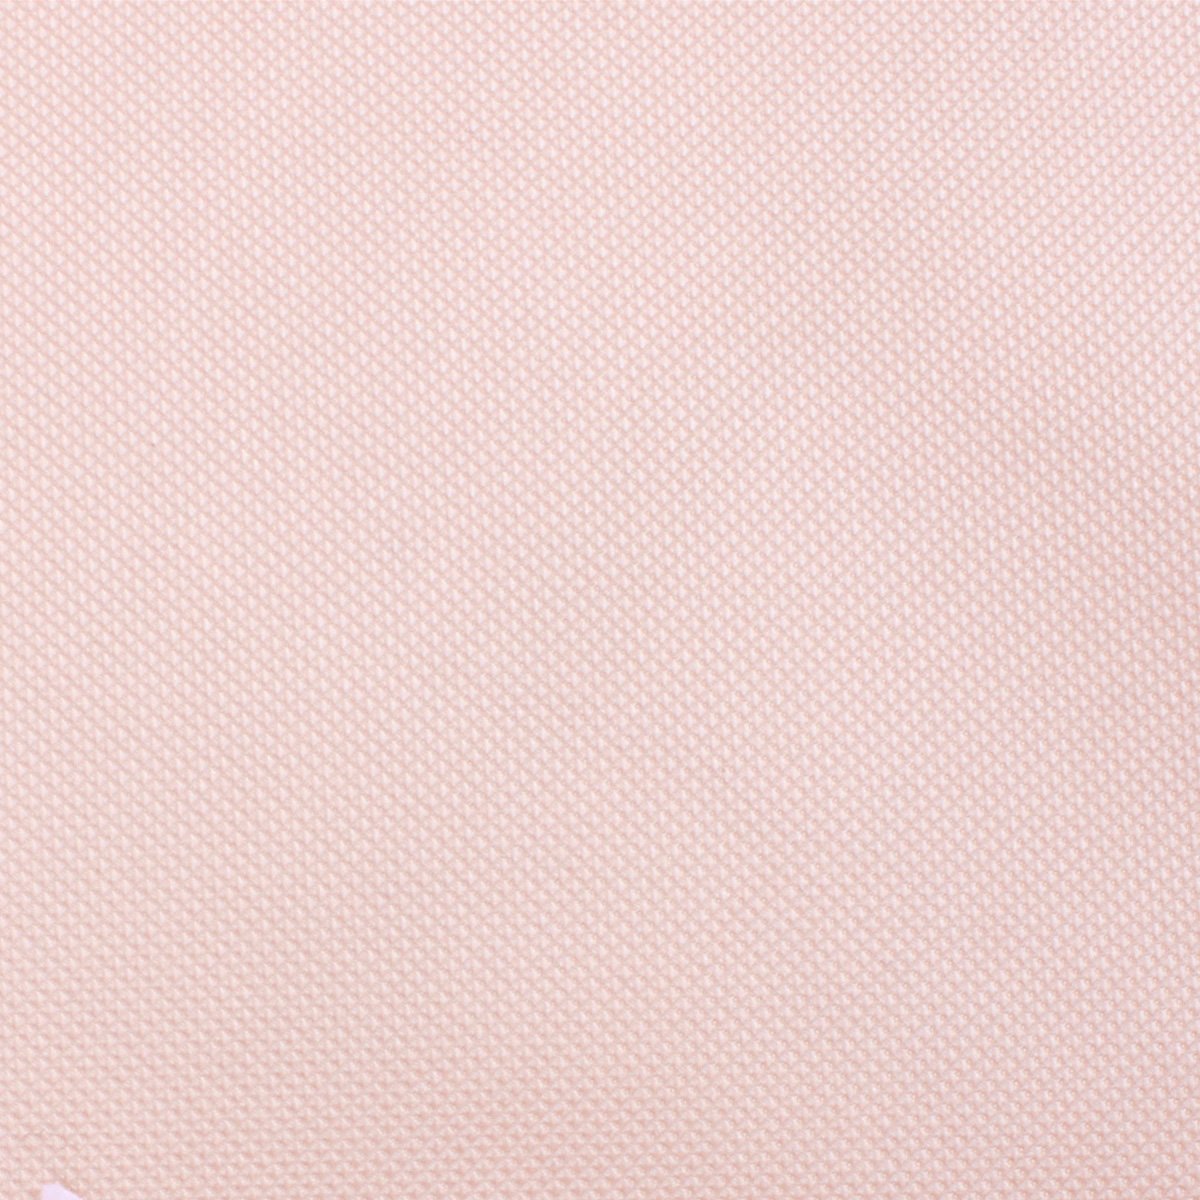 Liege Blush Pink Diamond Pocket Square Fabric